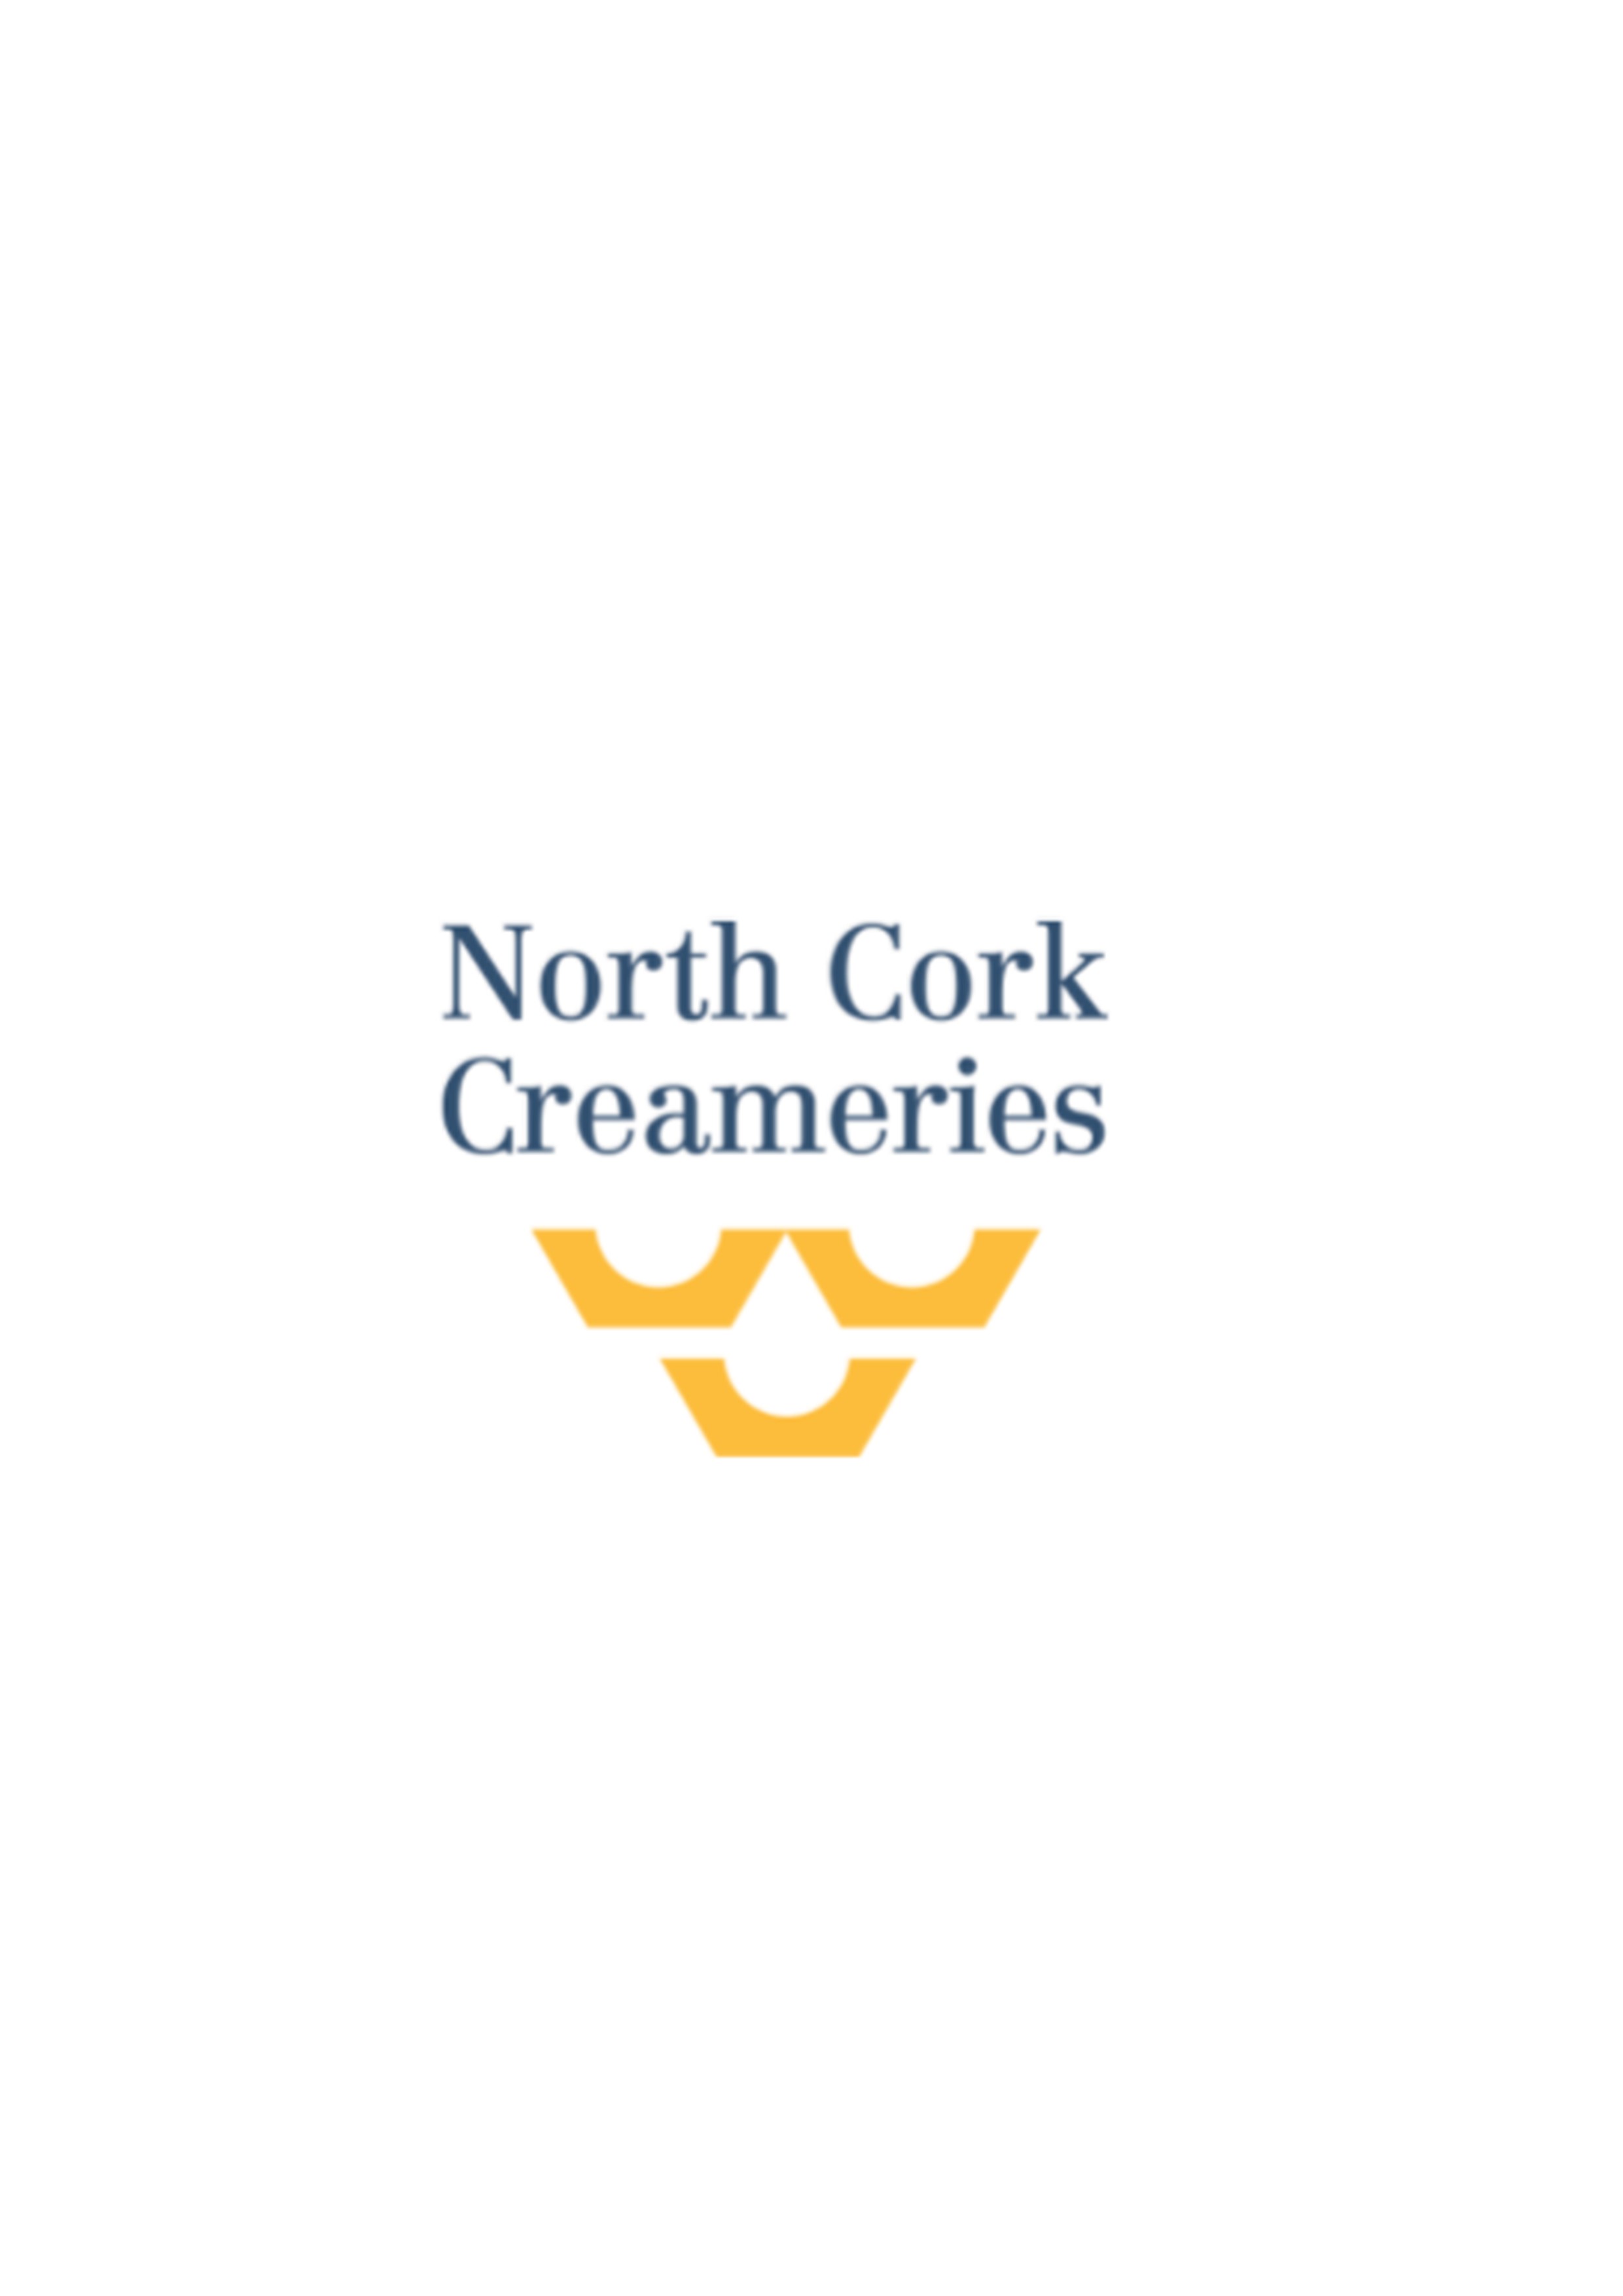 North Cork Creameries